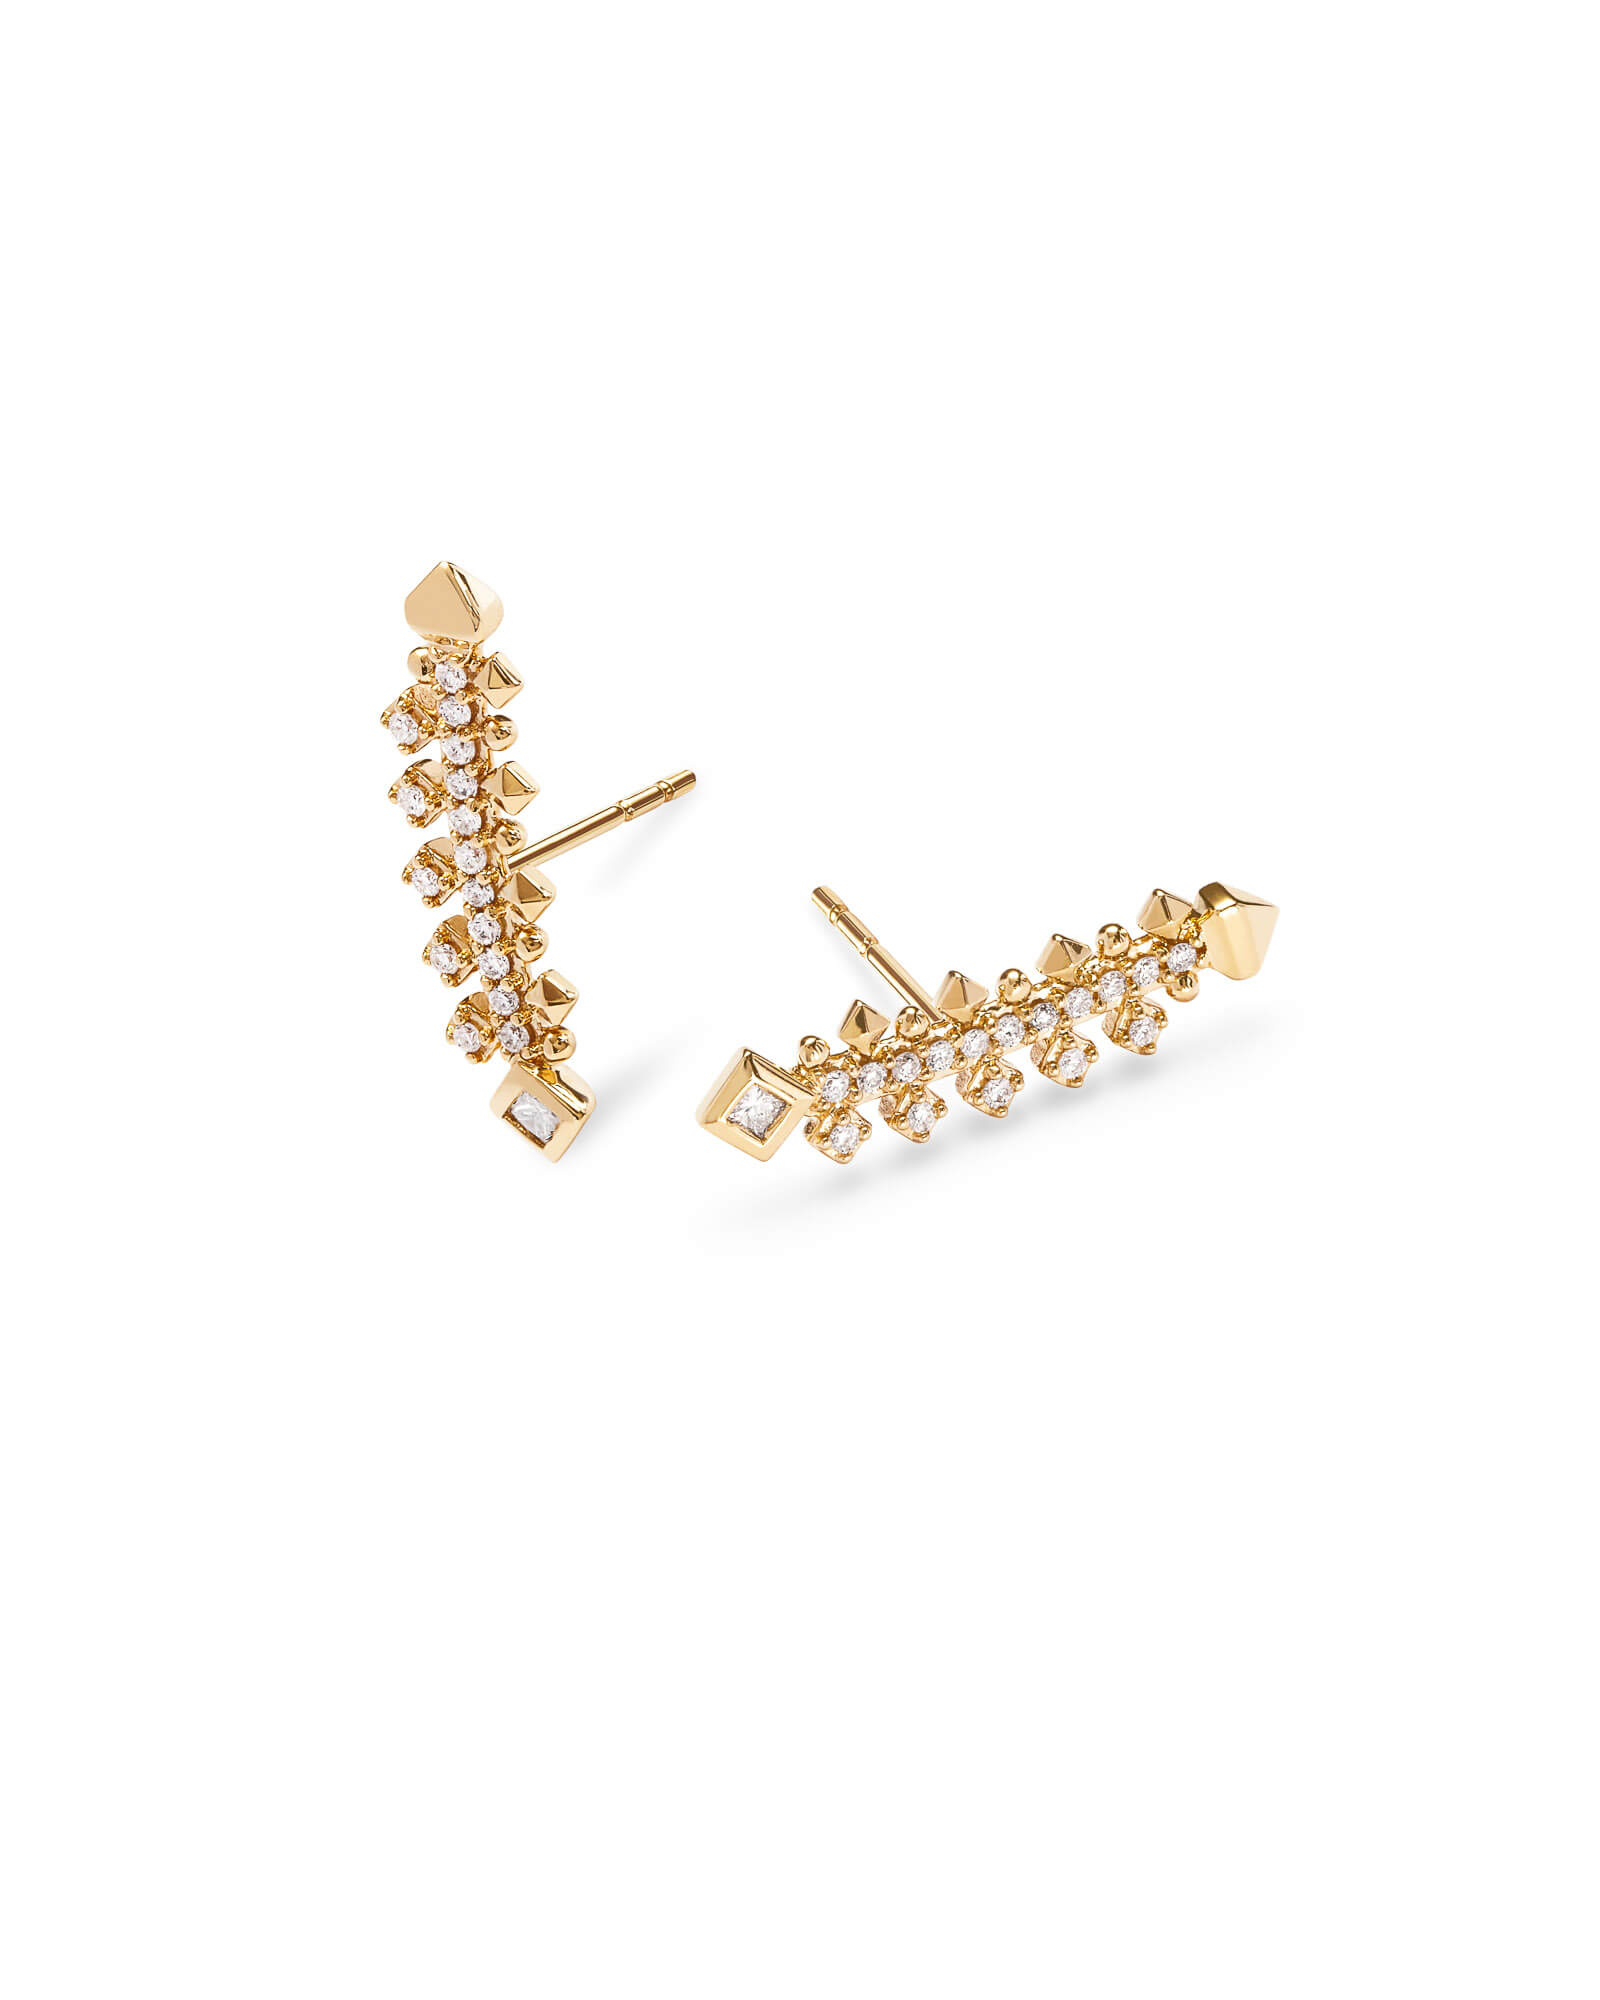 Kendra Scott Indie 14k Yellow Gold Earrings in White Diamond | Diamonds